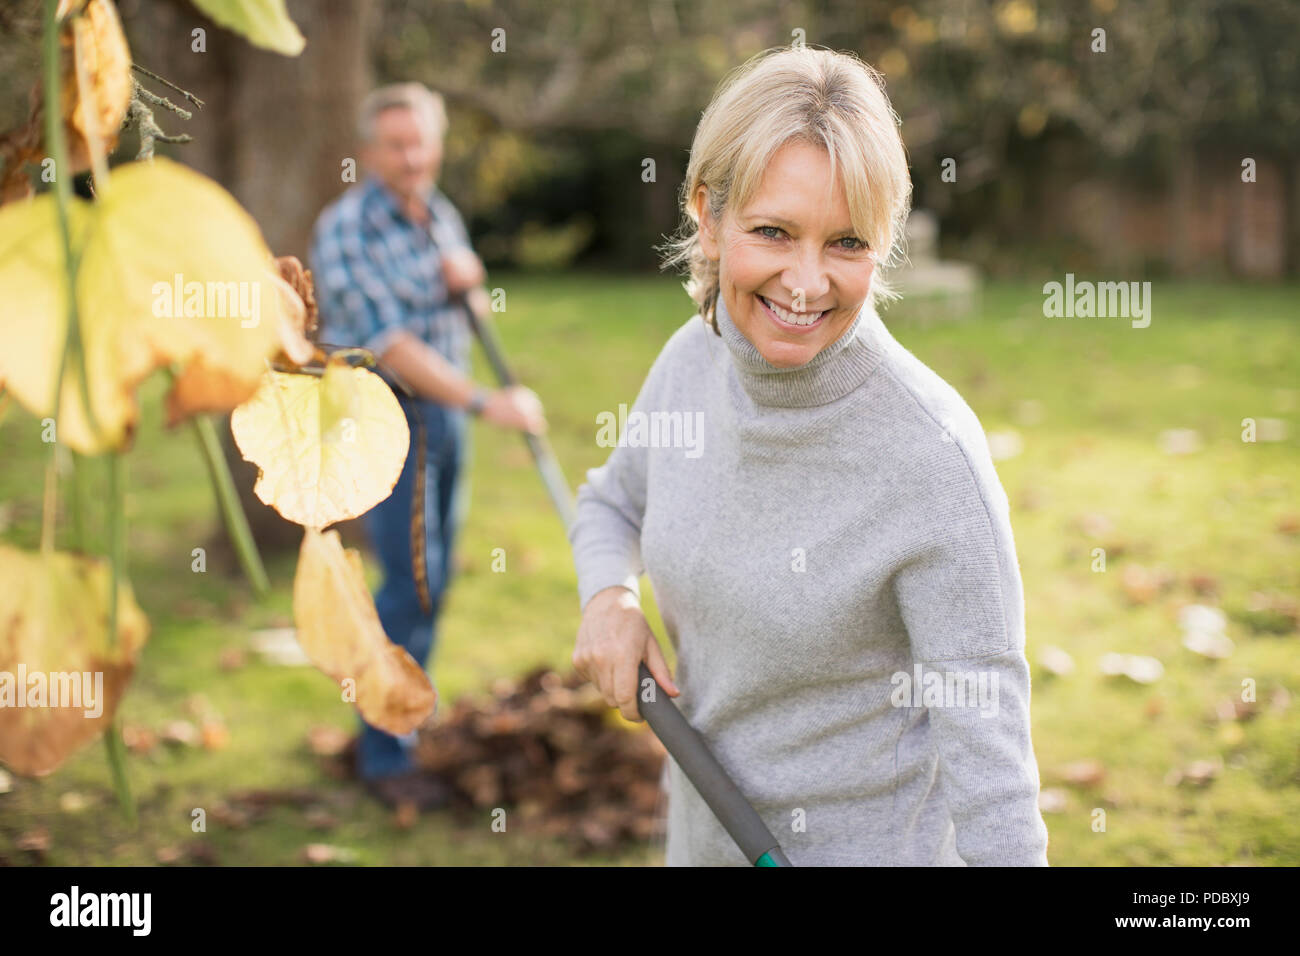 Portrait smiling, confident mature woman raking leaves in autumn backyard Stock Photo